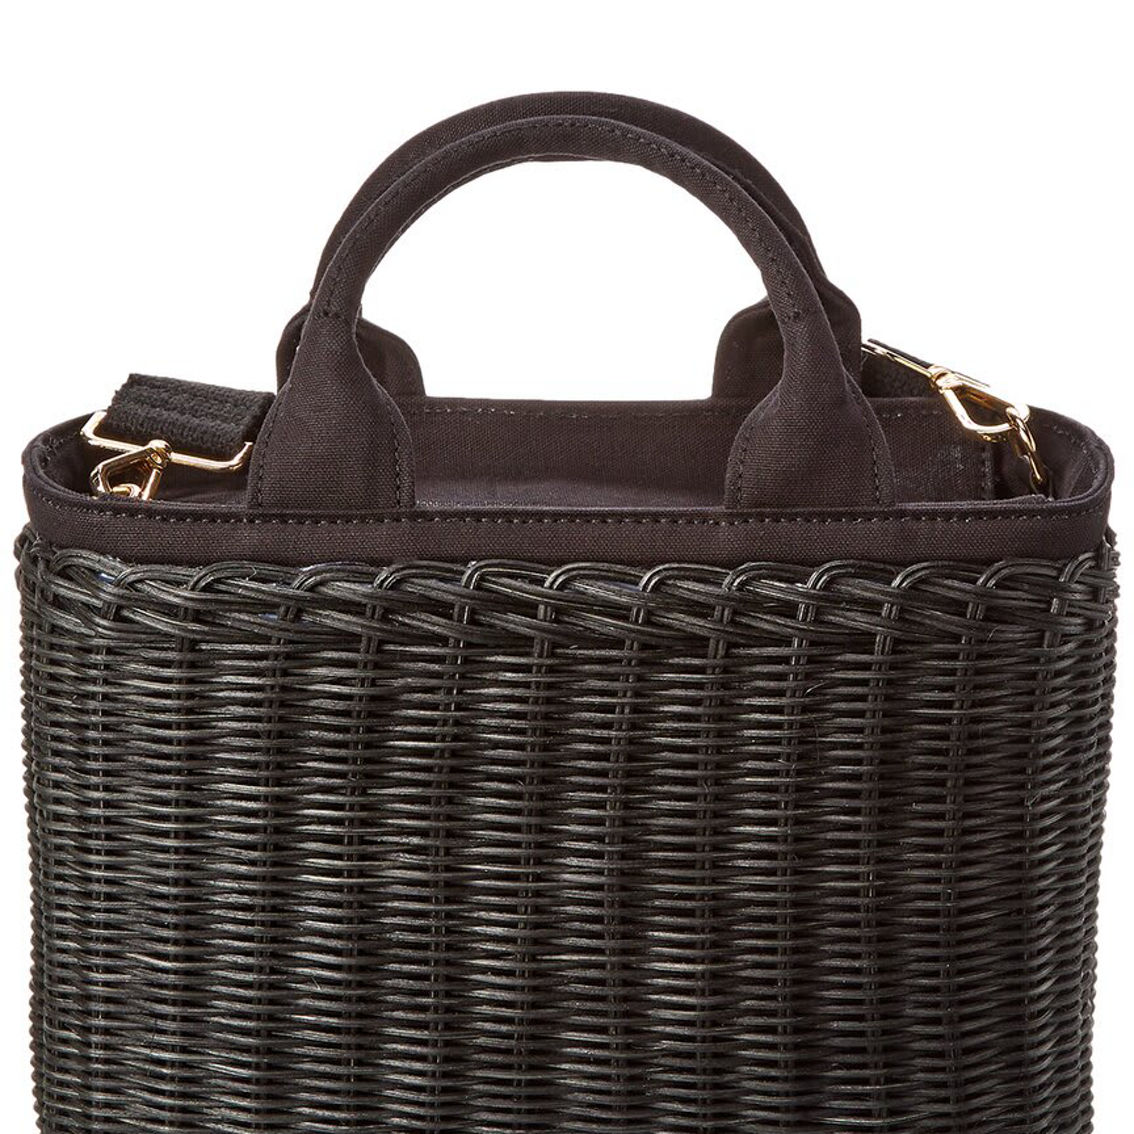 Surell Accessories Handmade Straw Basket Bag - Image 2 of 2